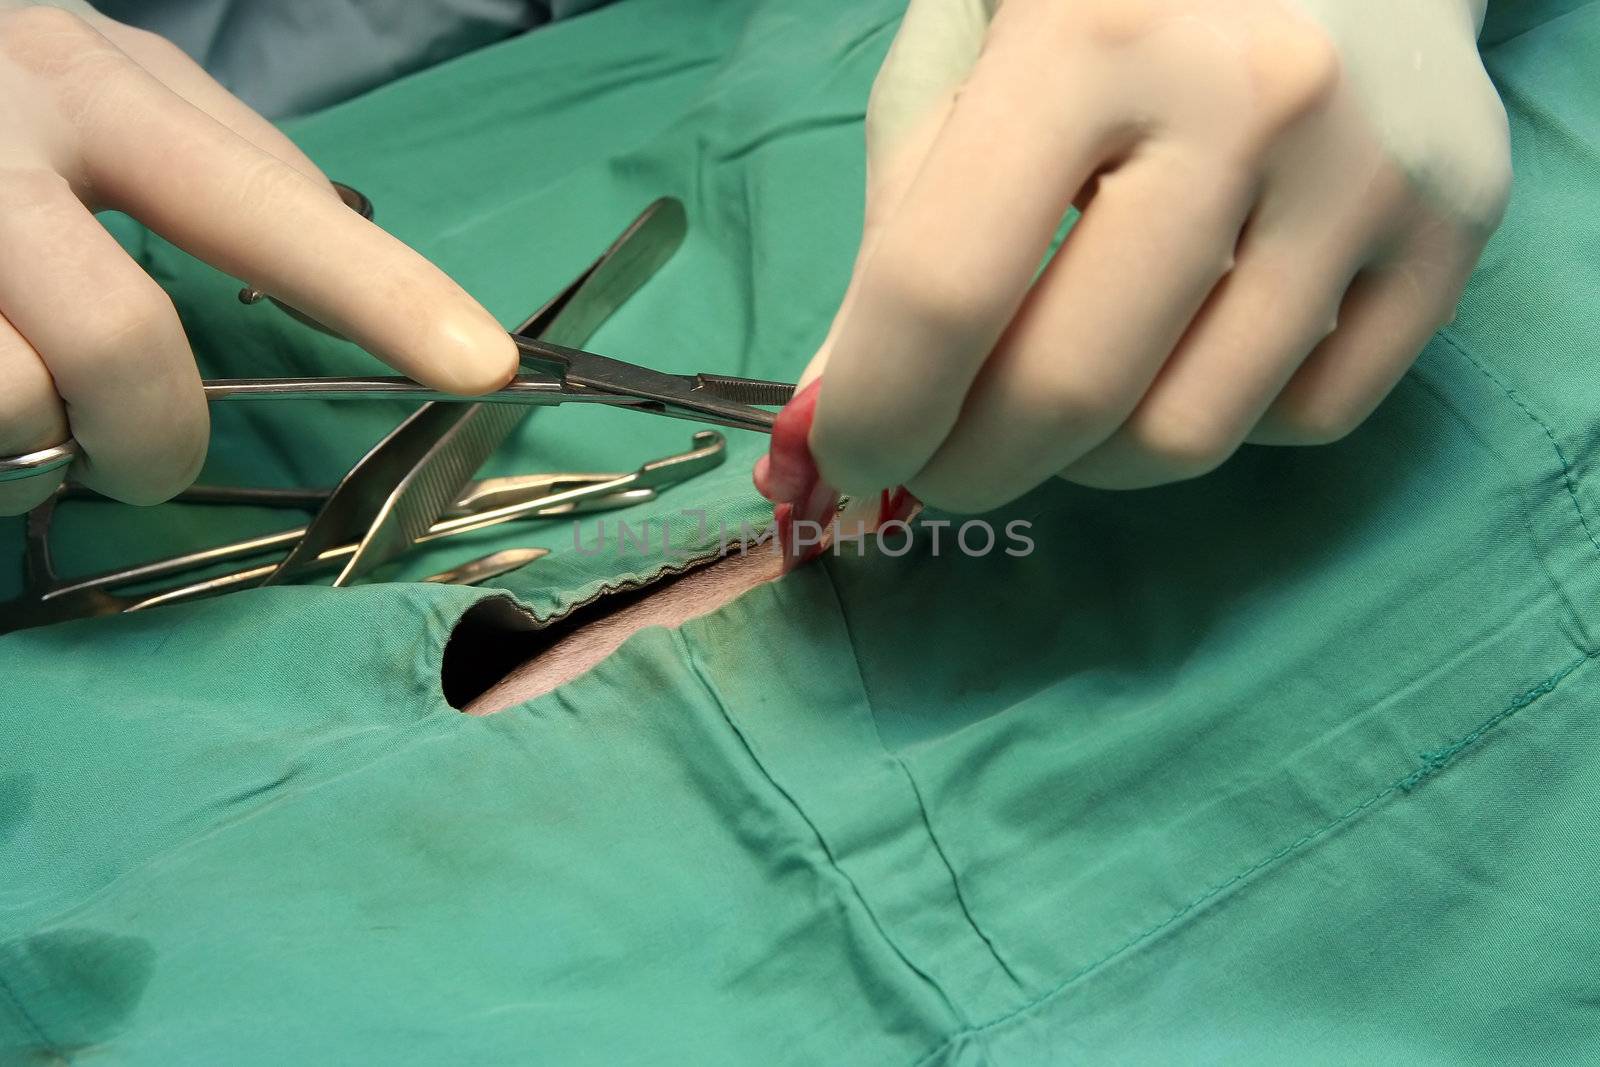 Durgeon doing a procedure on the intestine